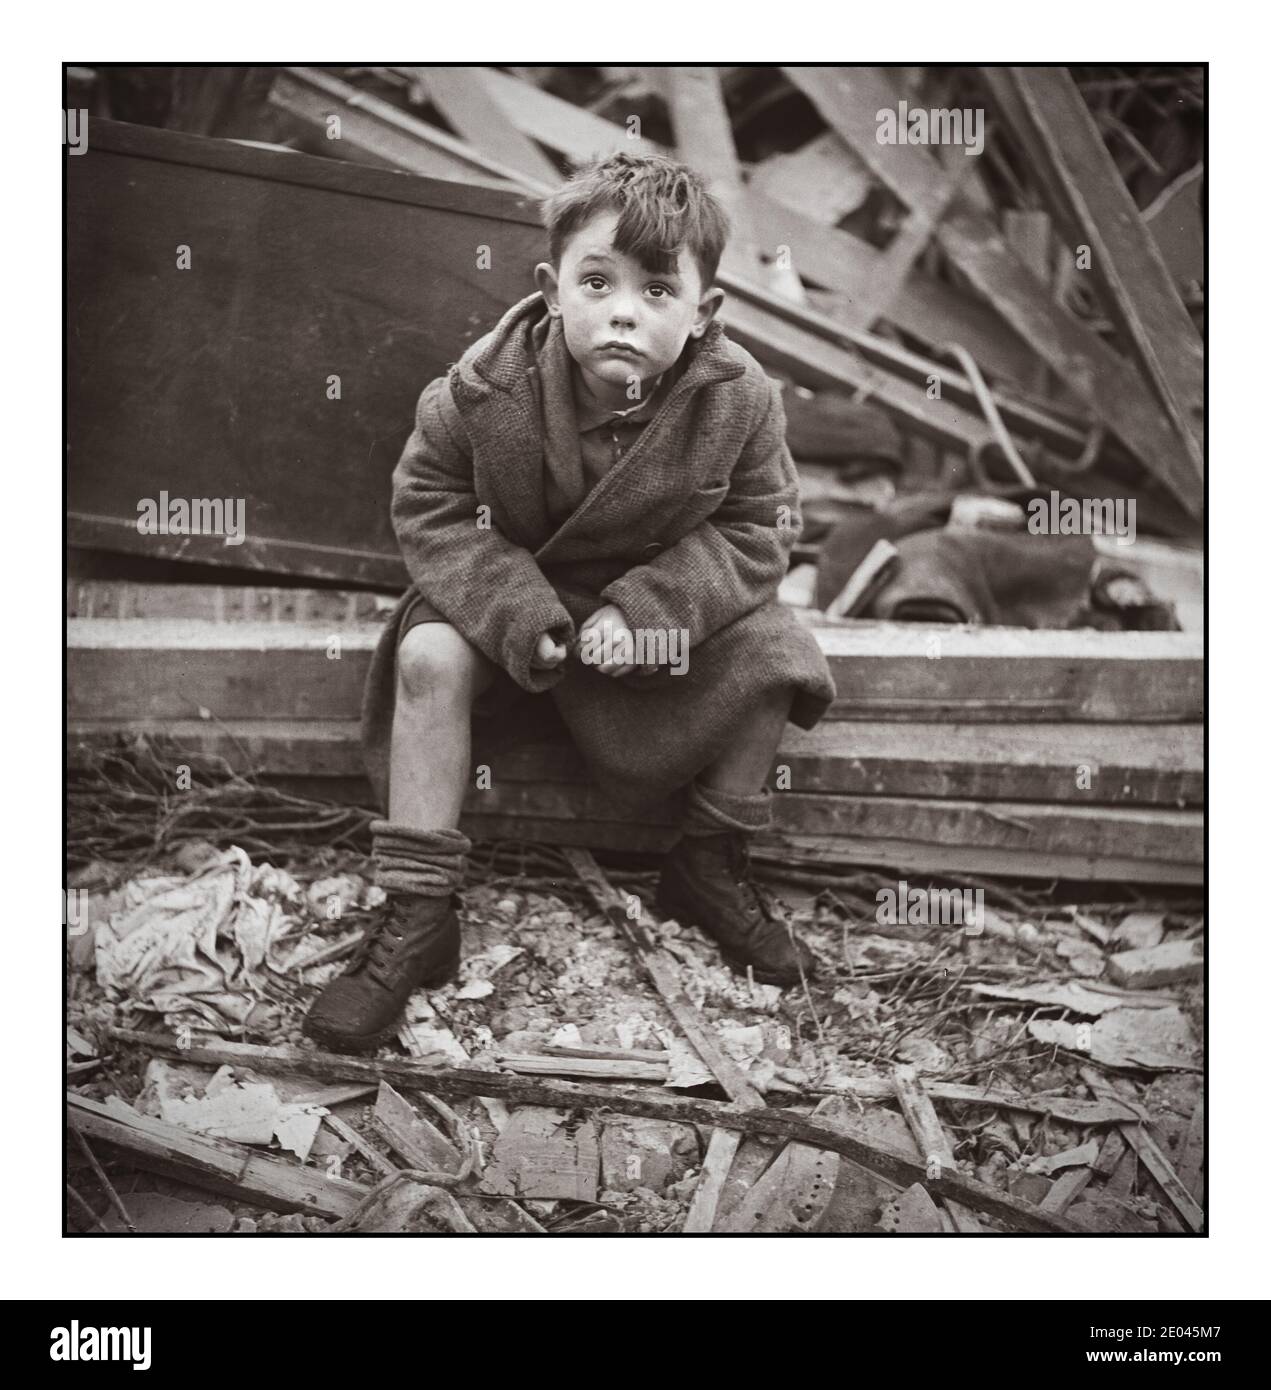 1940’s Nazi London Blitz Bombing Archive Boy 5-9 years seated in wreckage of home after a bombing raid of London during Nazi Blitz terror bombing raid World War II] Frissell, Toni, 1907-1988, photographer [1945 Jan.] World War, 1939-1945--Destruction & pillage--England--London--1940-1950 War damage--England--London--1940-1950 Boys--England--London--1940-1950 Stock Photo